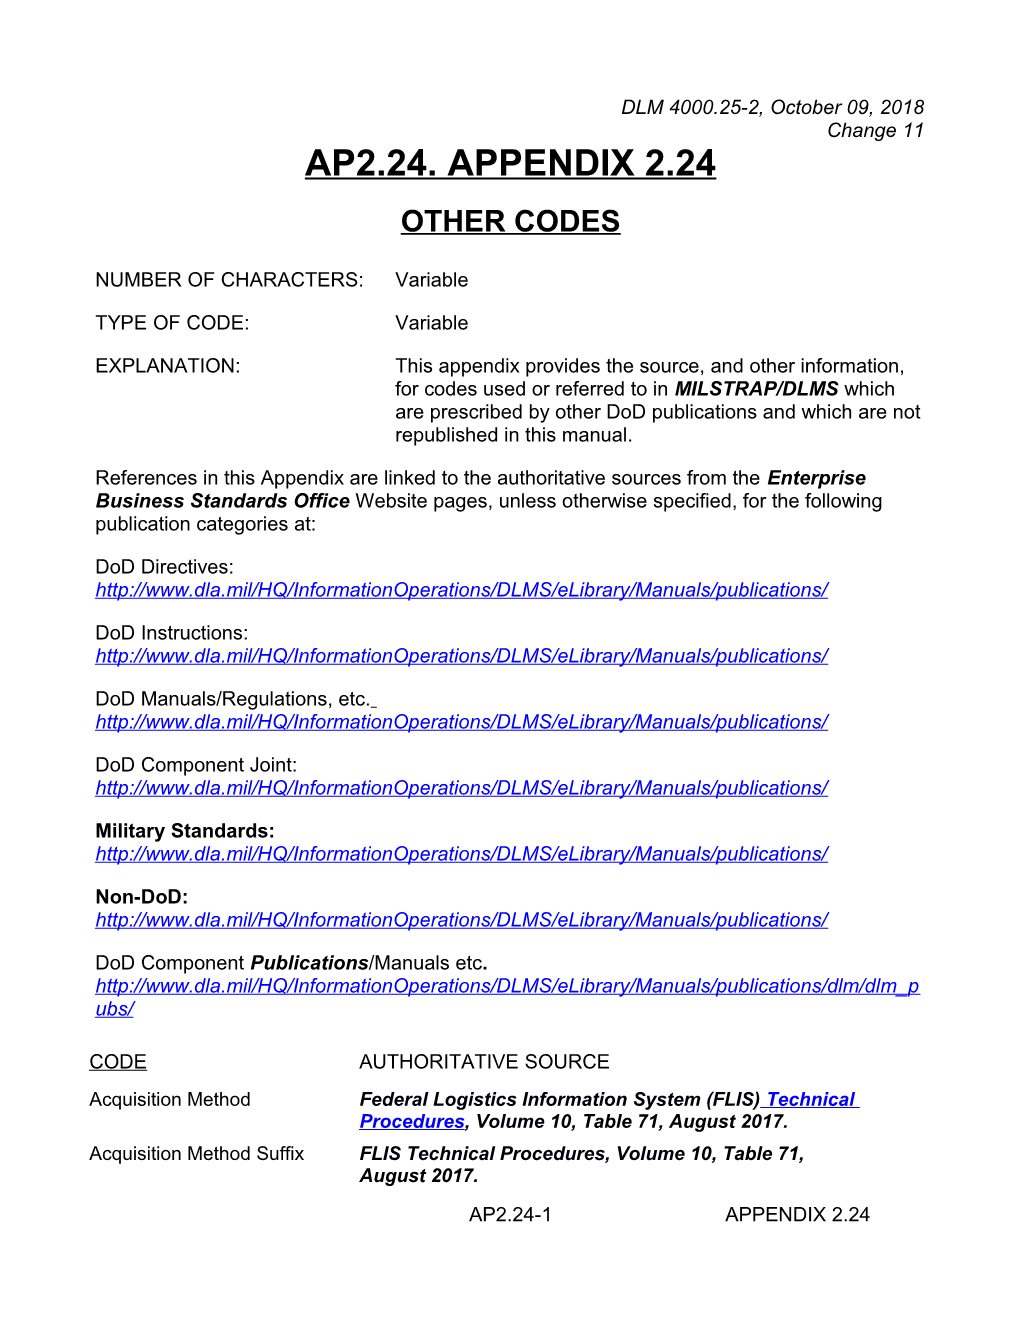 MILSTRAP AP2.24 Other Codes